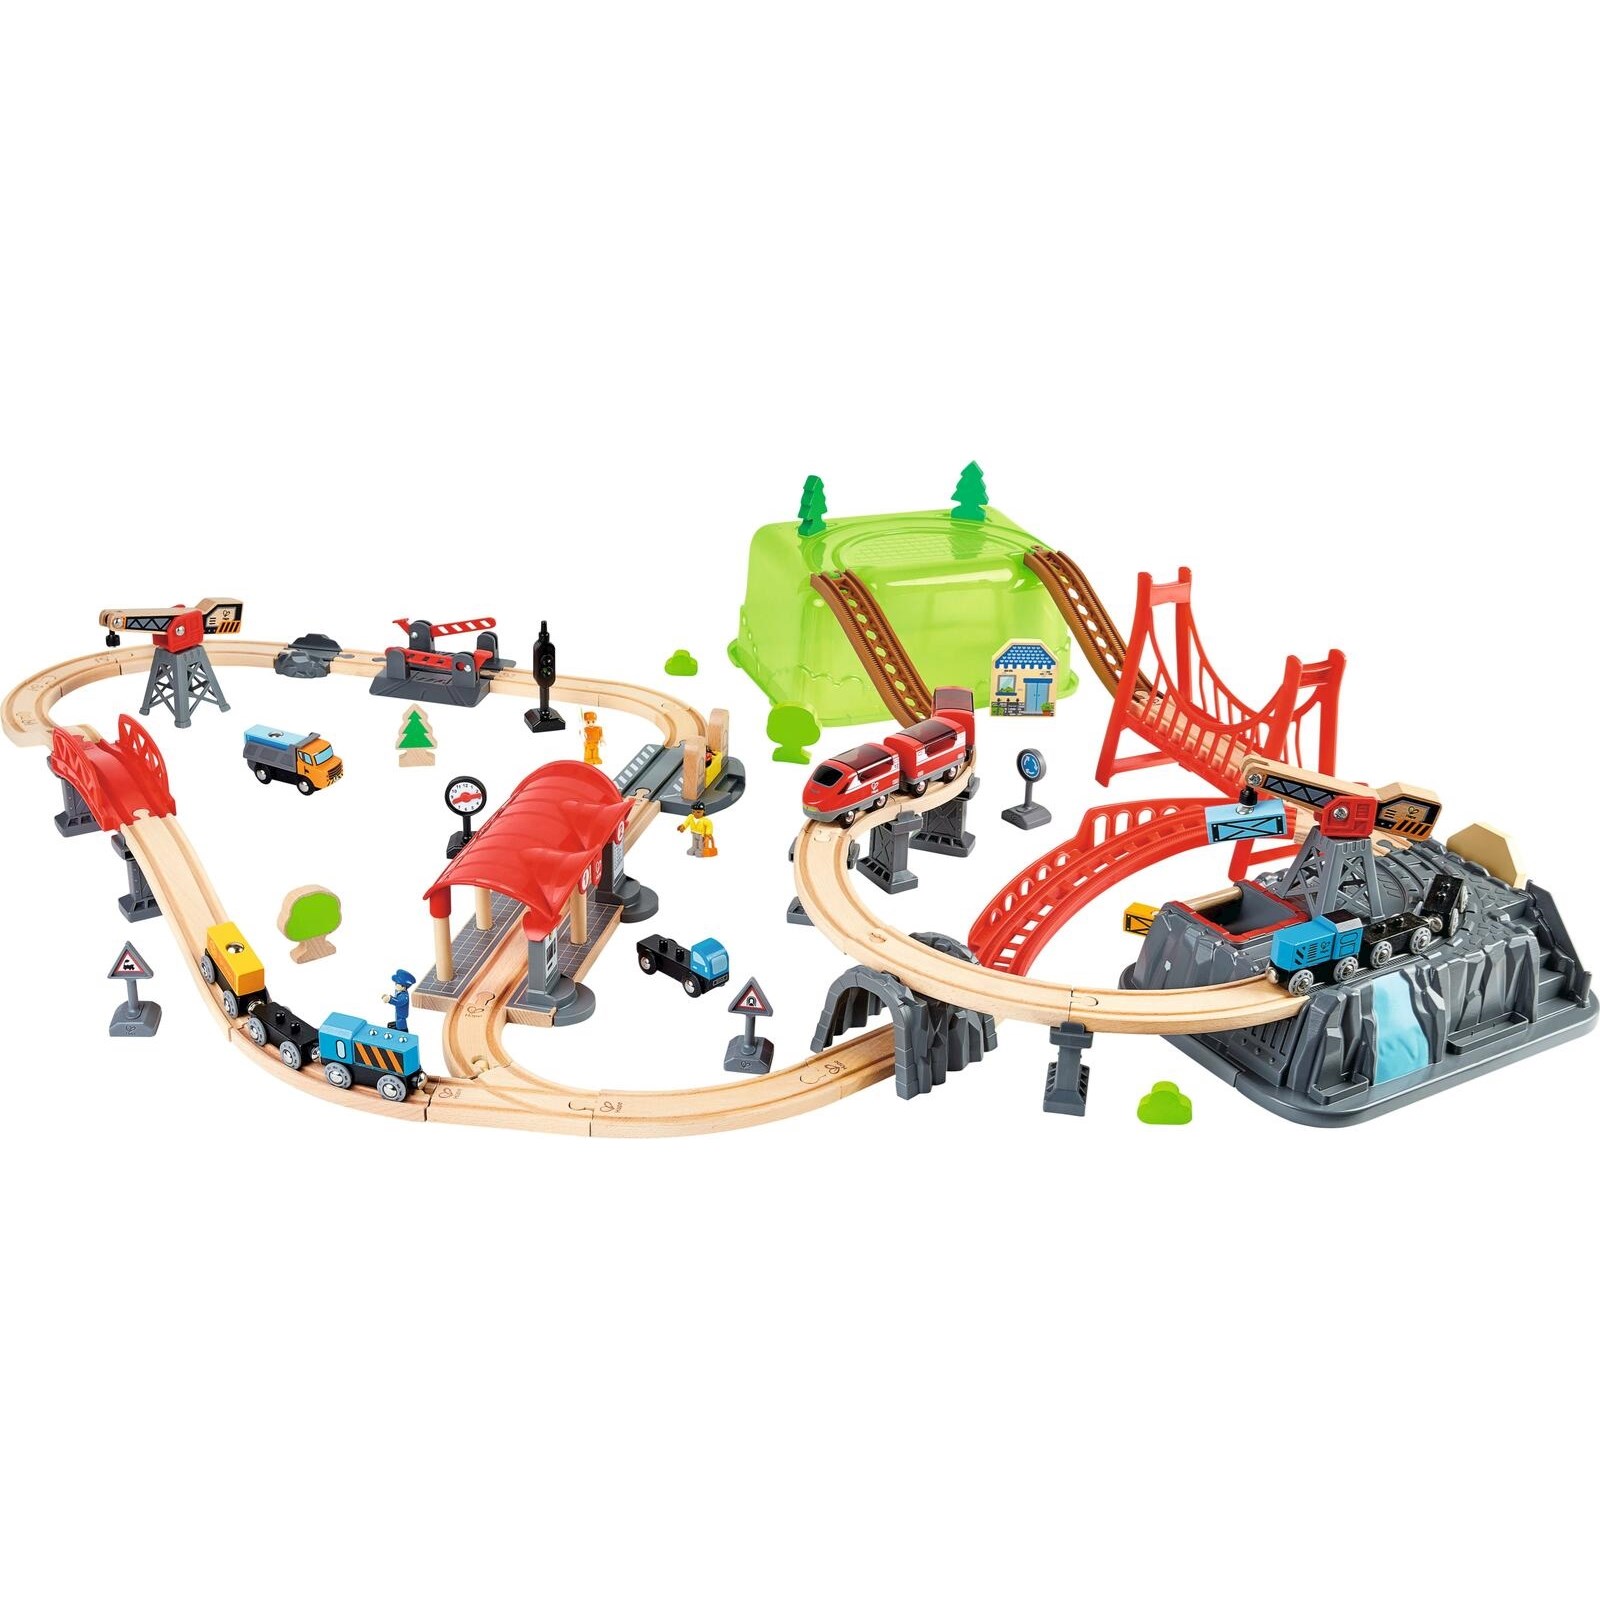 Holzeisenbahn Baukasten Set kaufen - Kinderspielzeug Indoor - LANDI